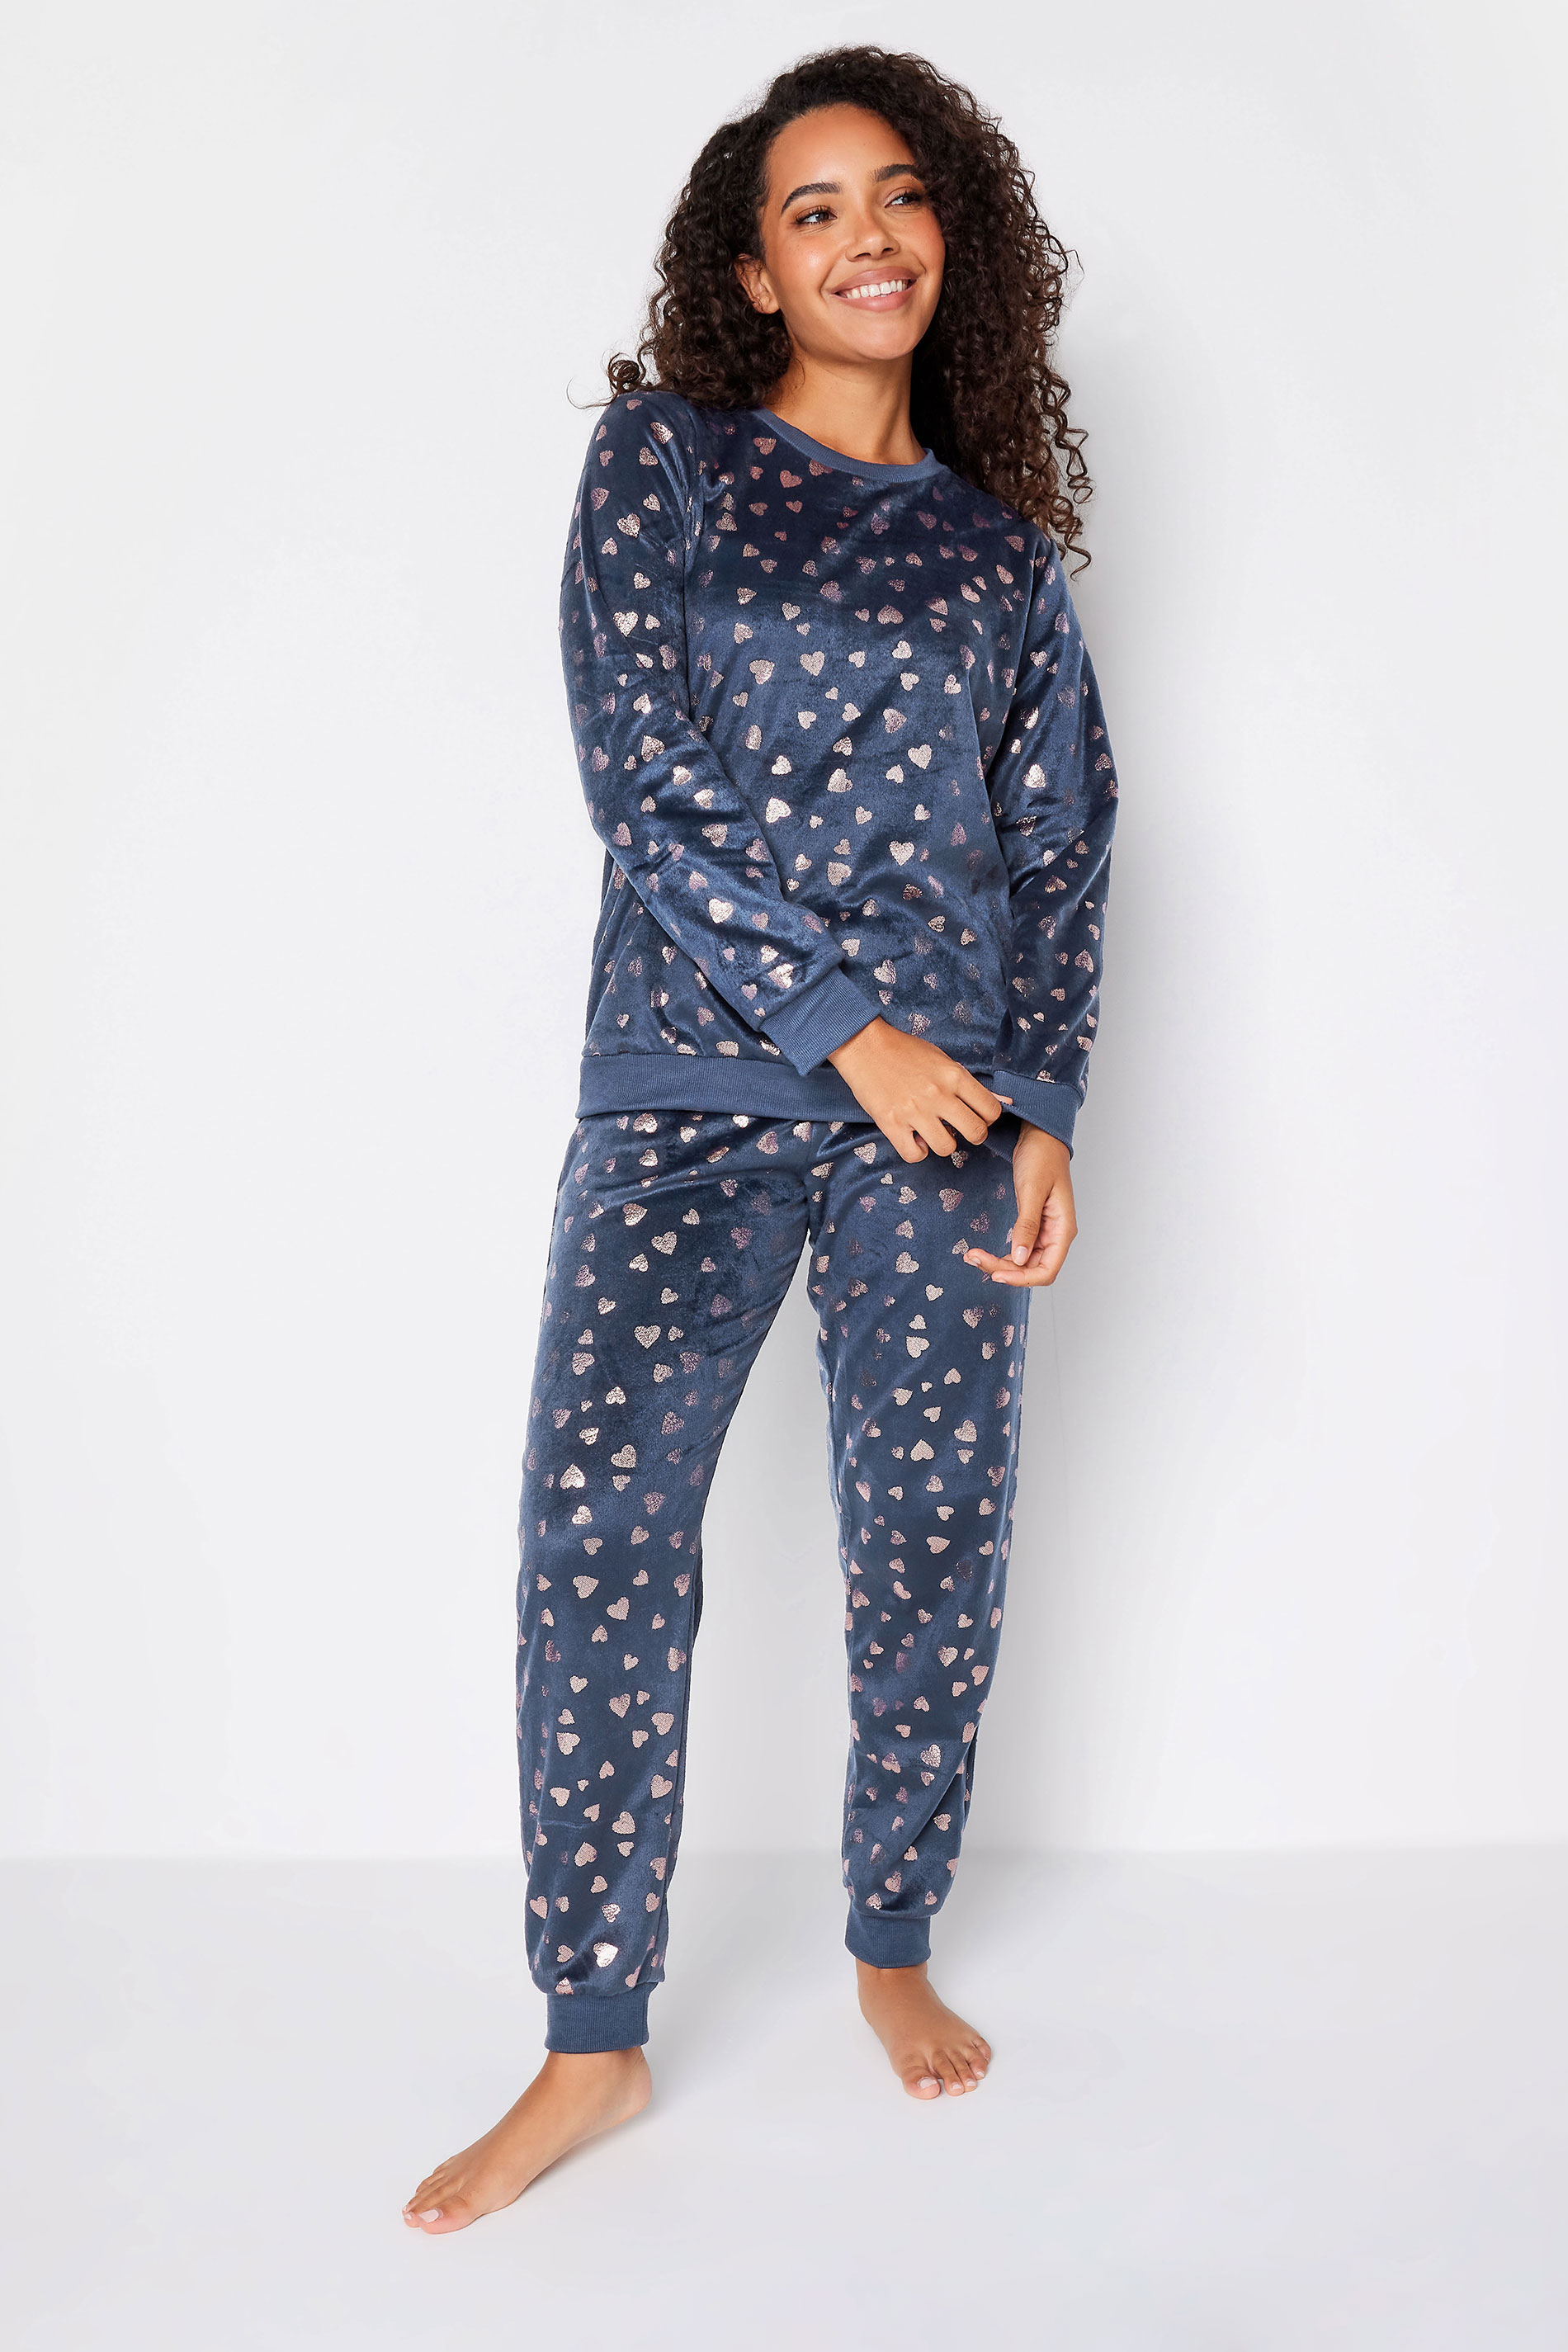 M&Co Blue Foil Heart Print Fleece Pyjama Lounge Set | M&Co